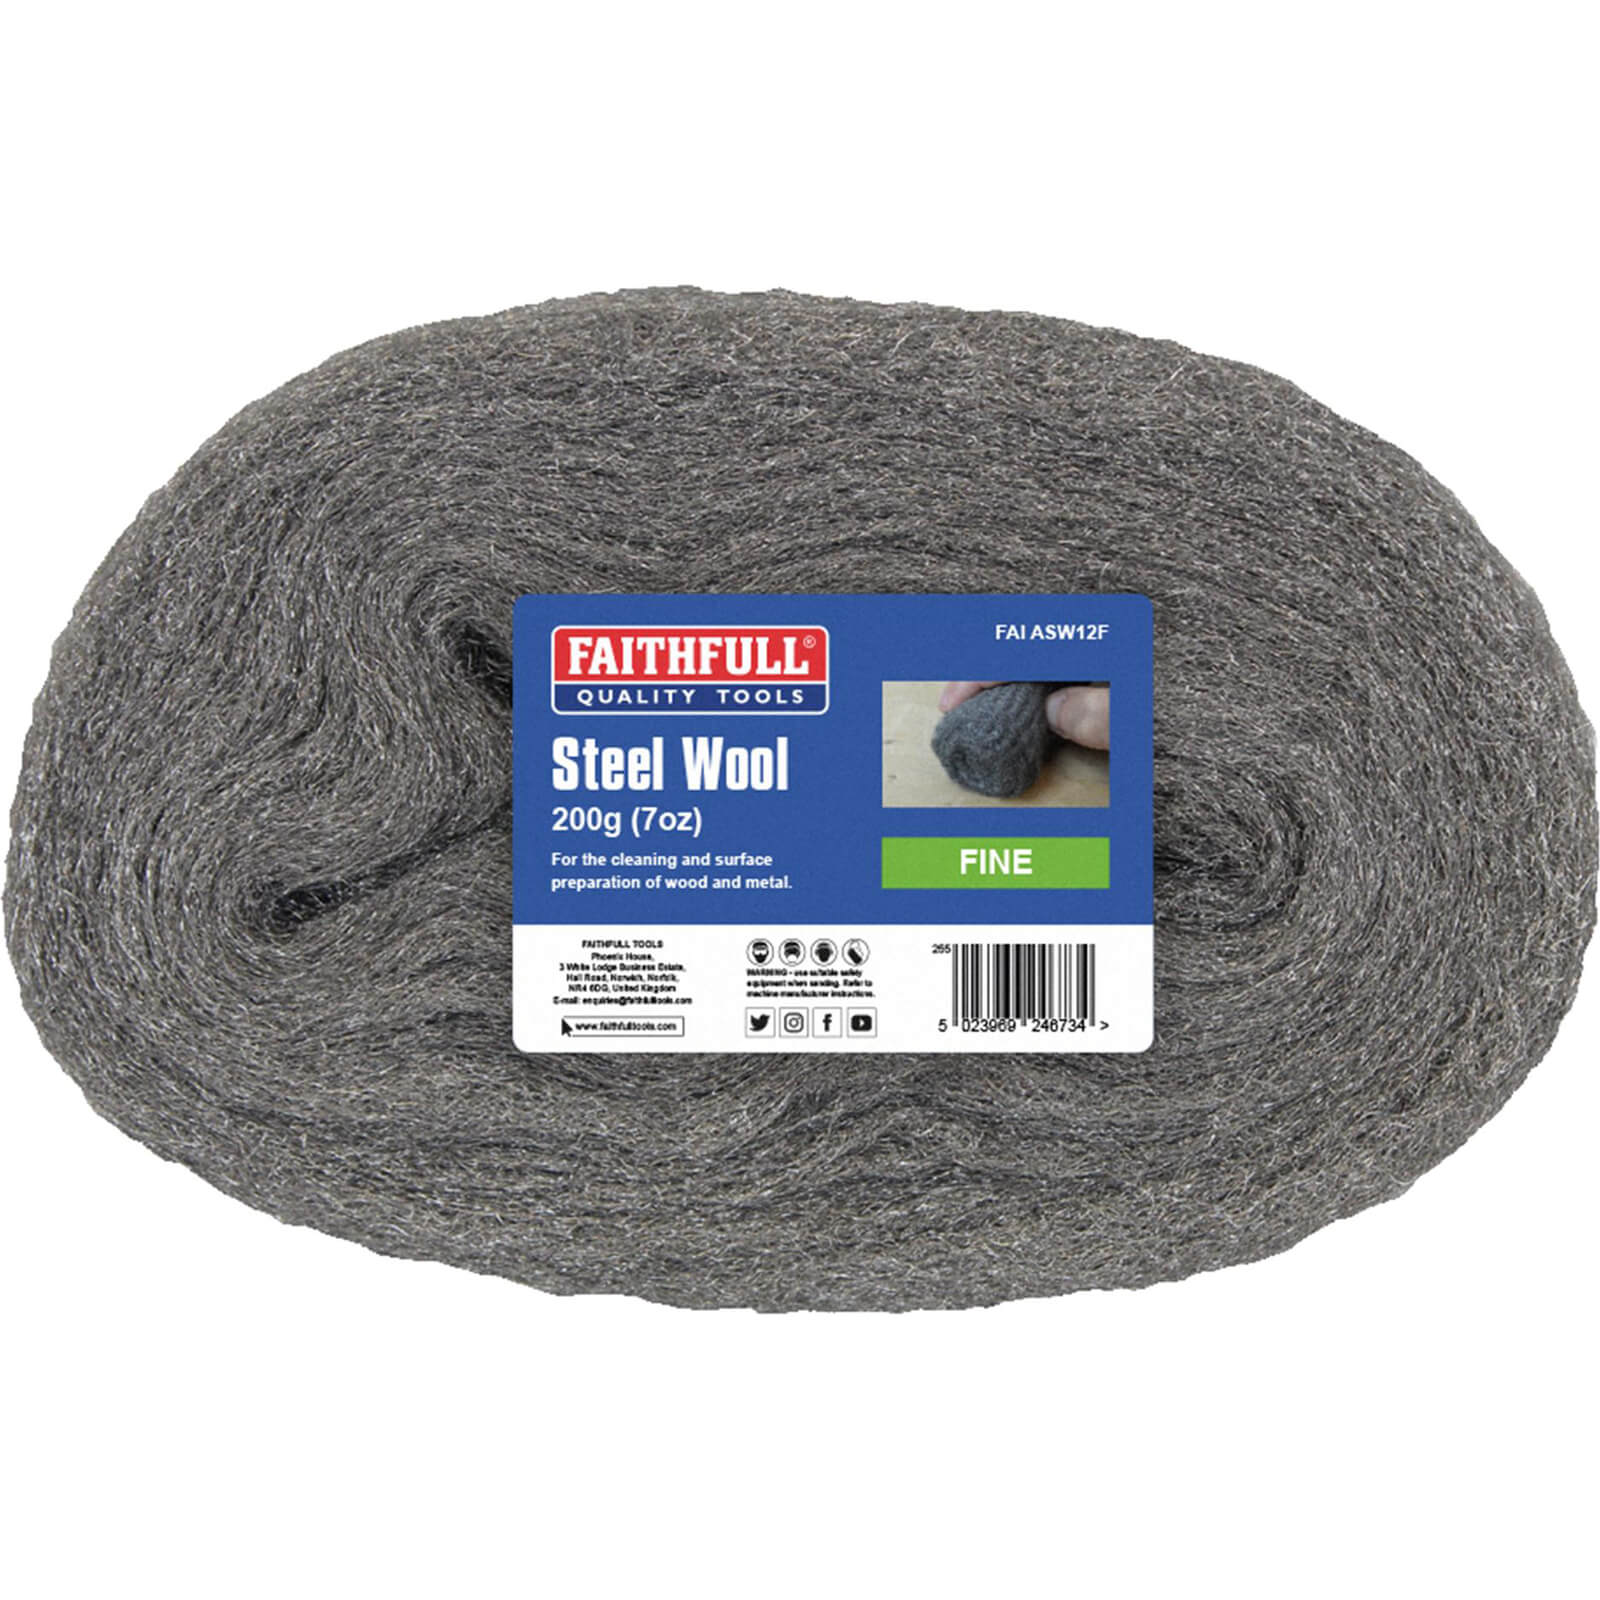 Image of Faithfull Steel Wire Wool Fine 200g